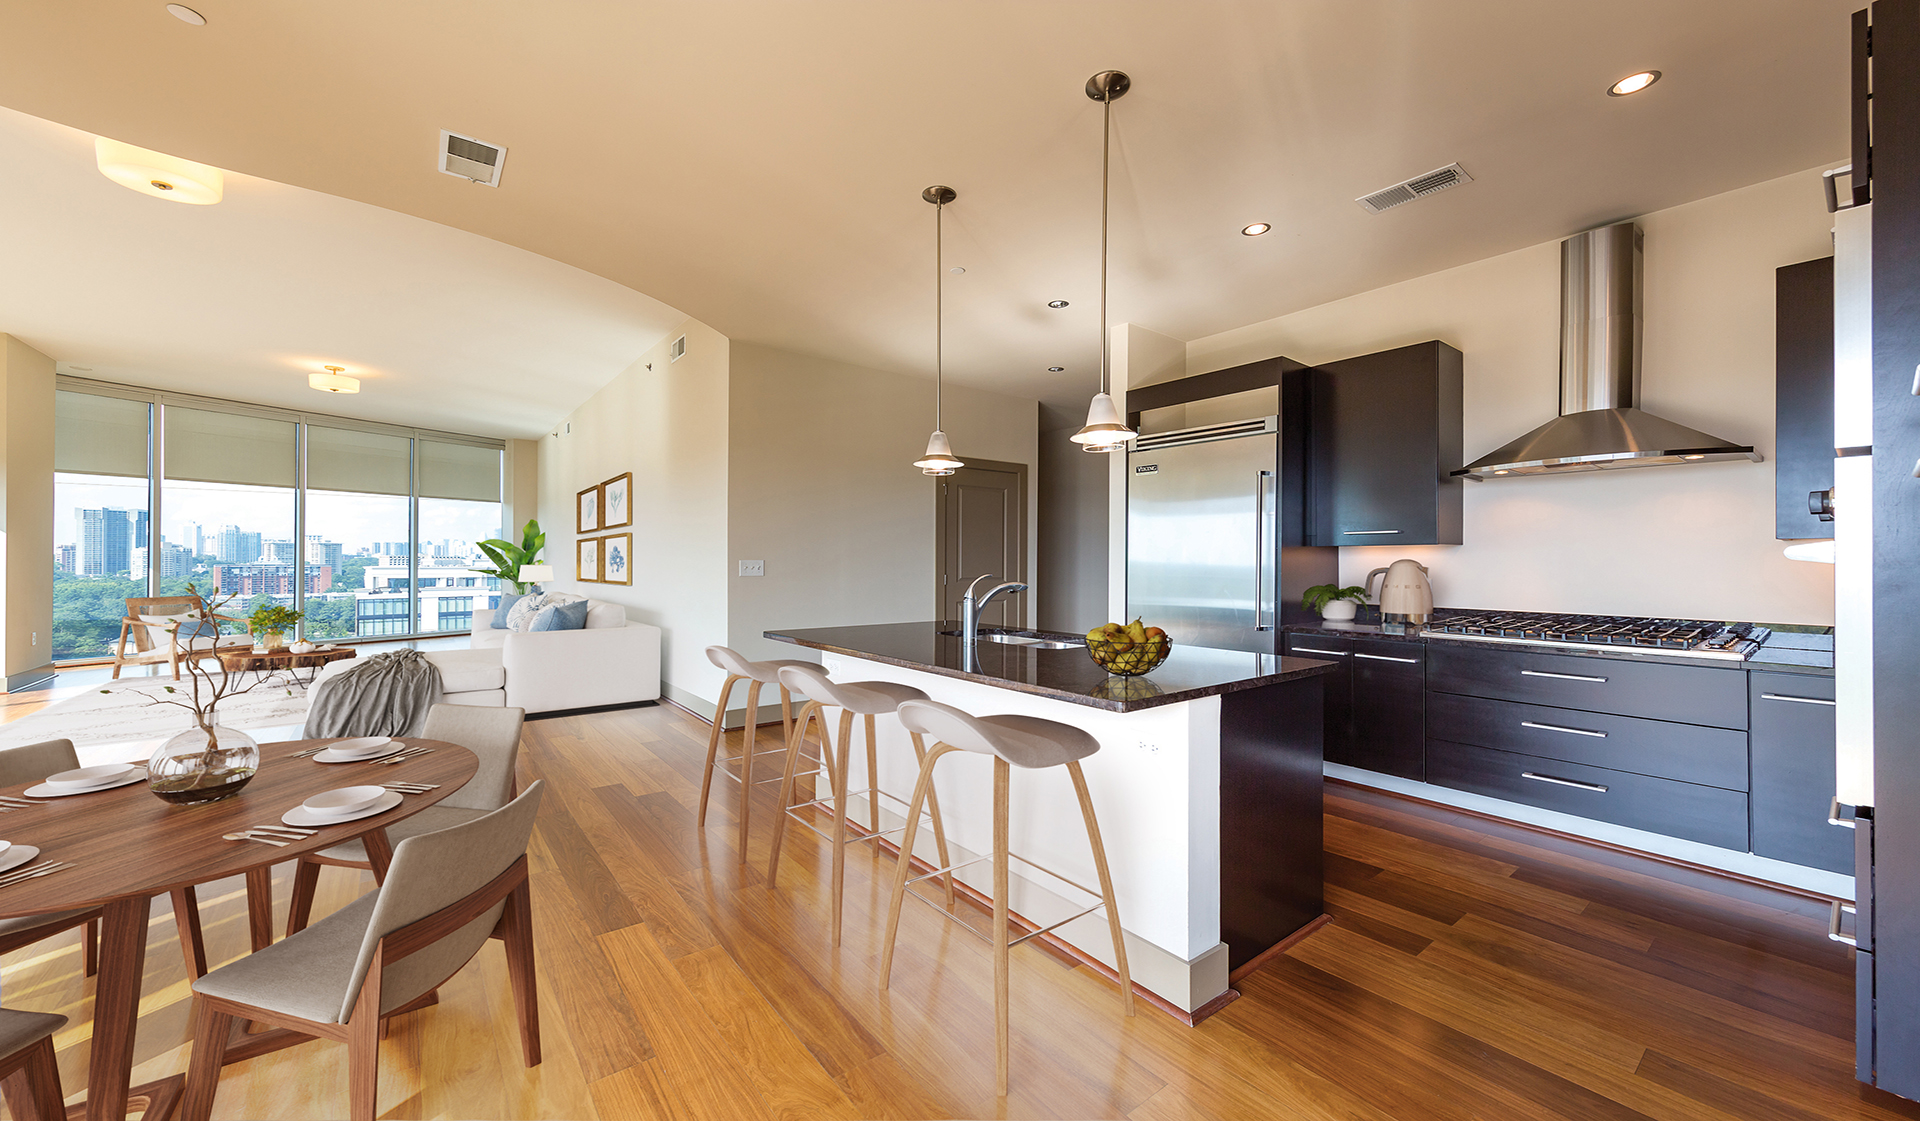 Mezzo Apartments - Atlanta, GA - Interior Kitchen and Living Room